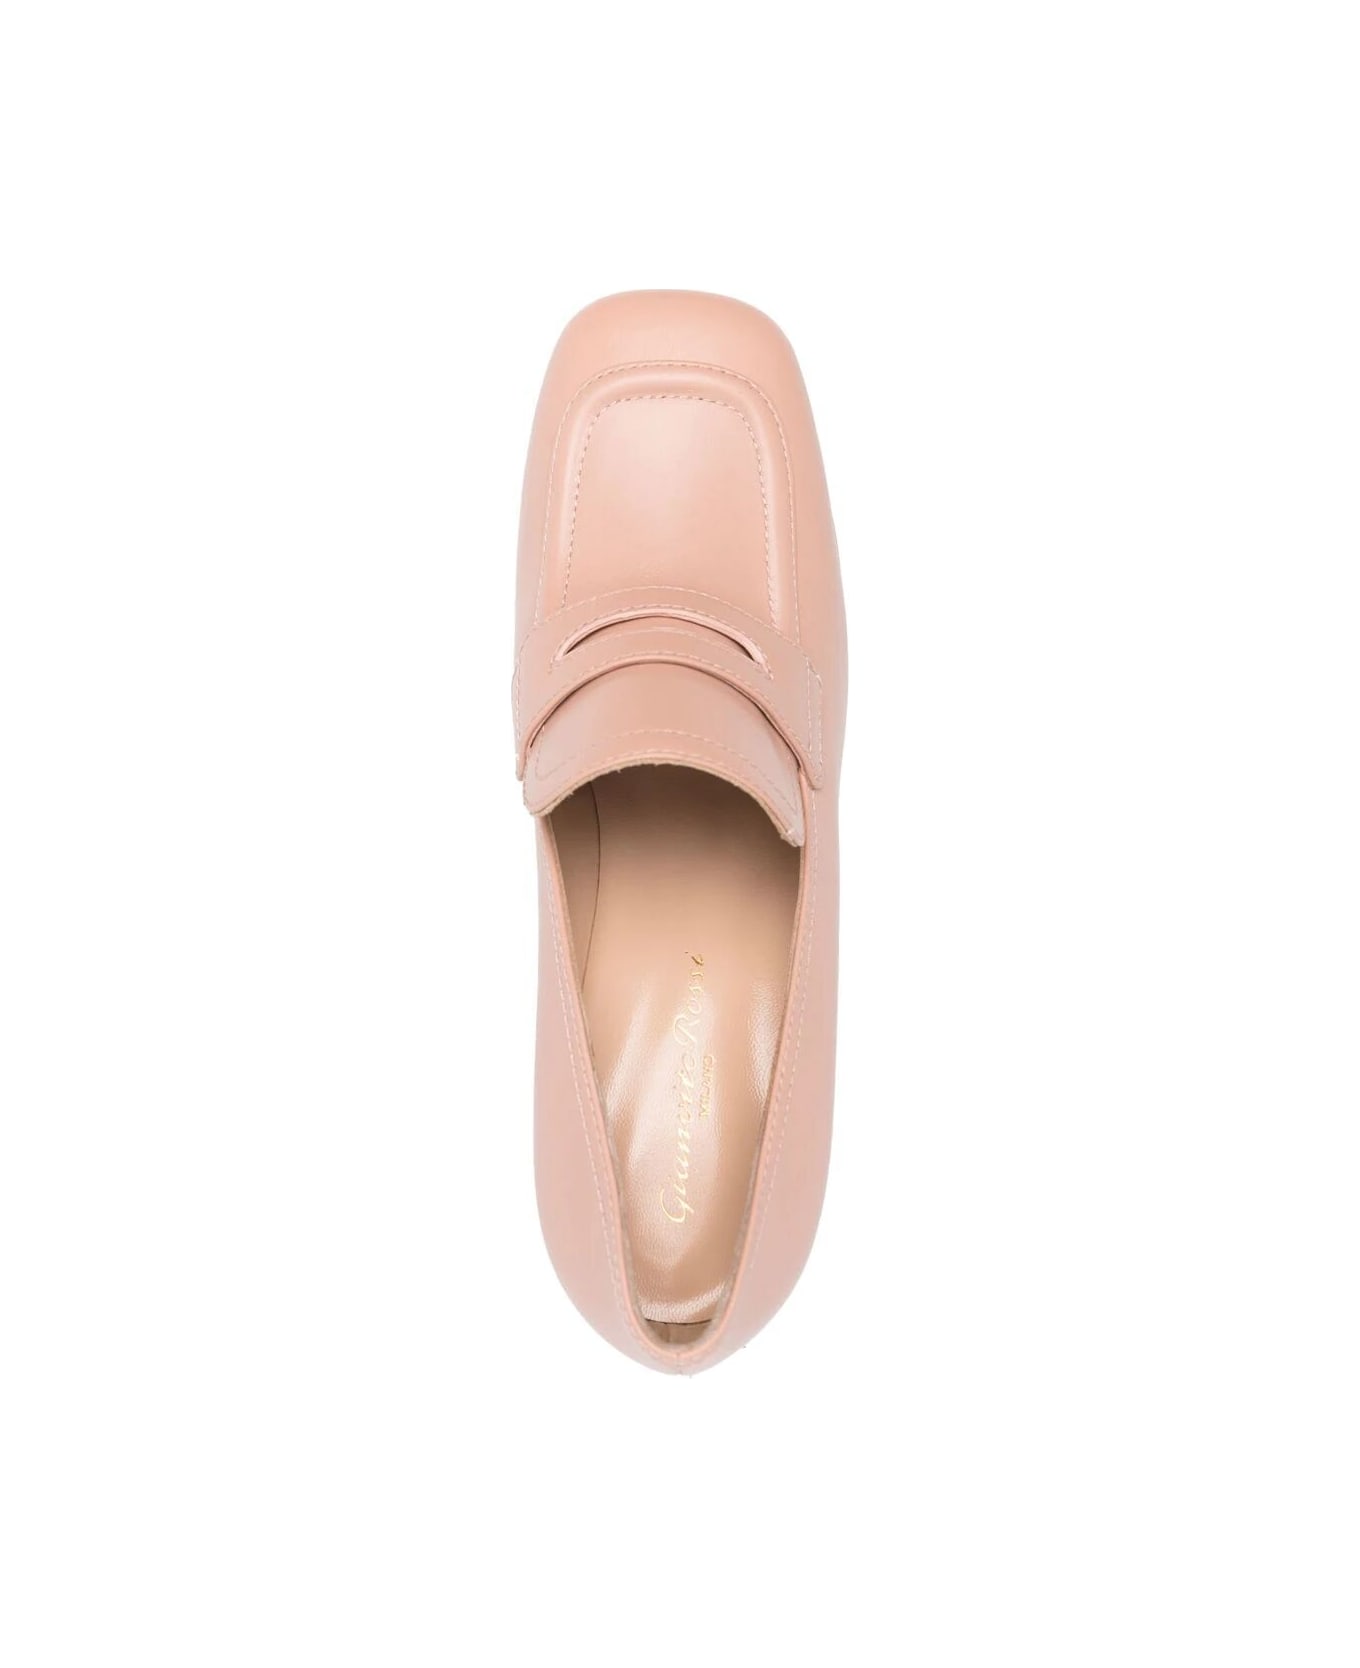 Gianvito Rossi Rouen Calf Glove Shoes - Peach